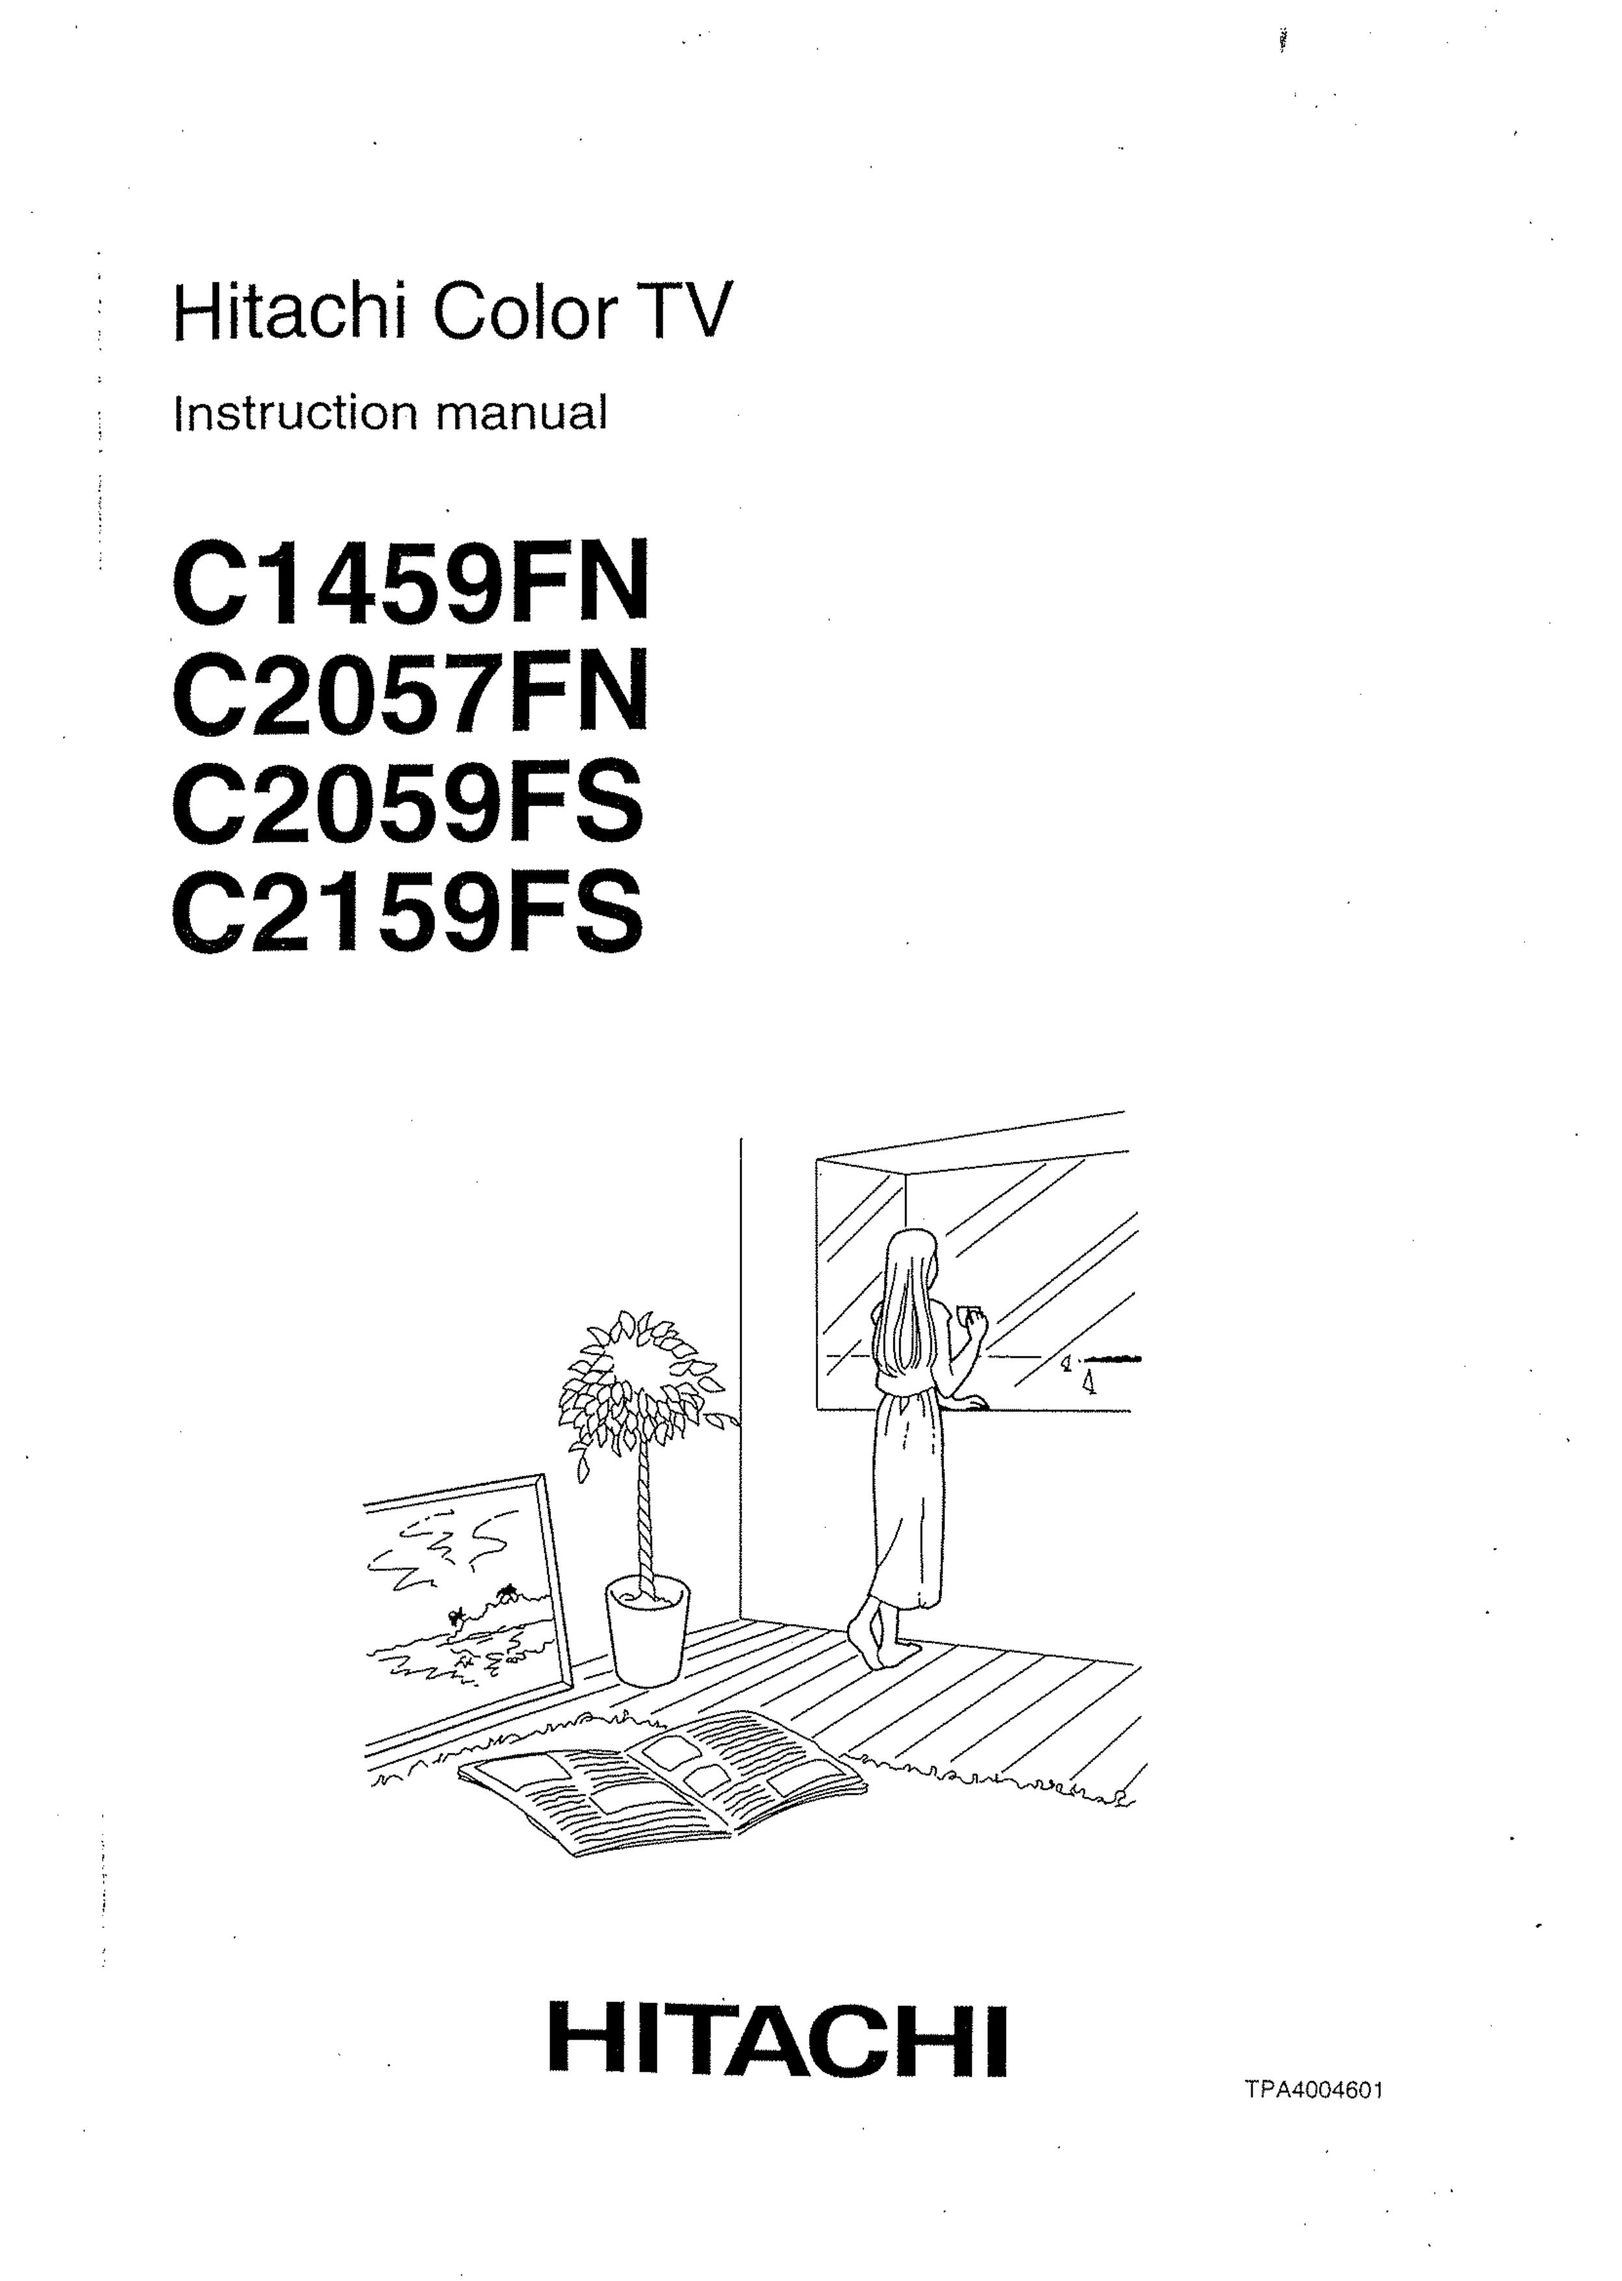 Hitachi C2159FS CRT Television User Manual